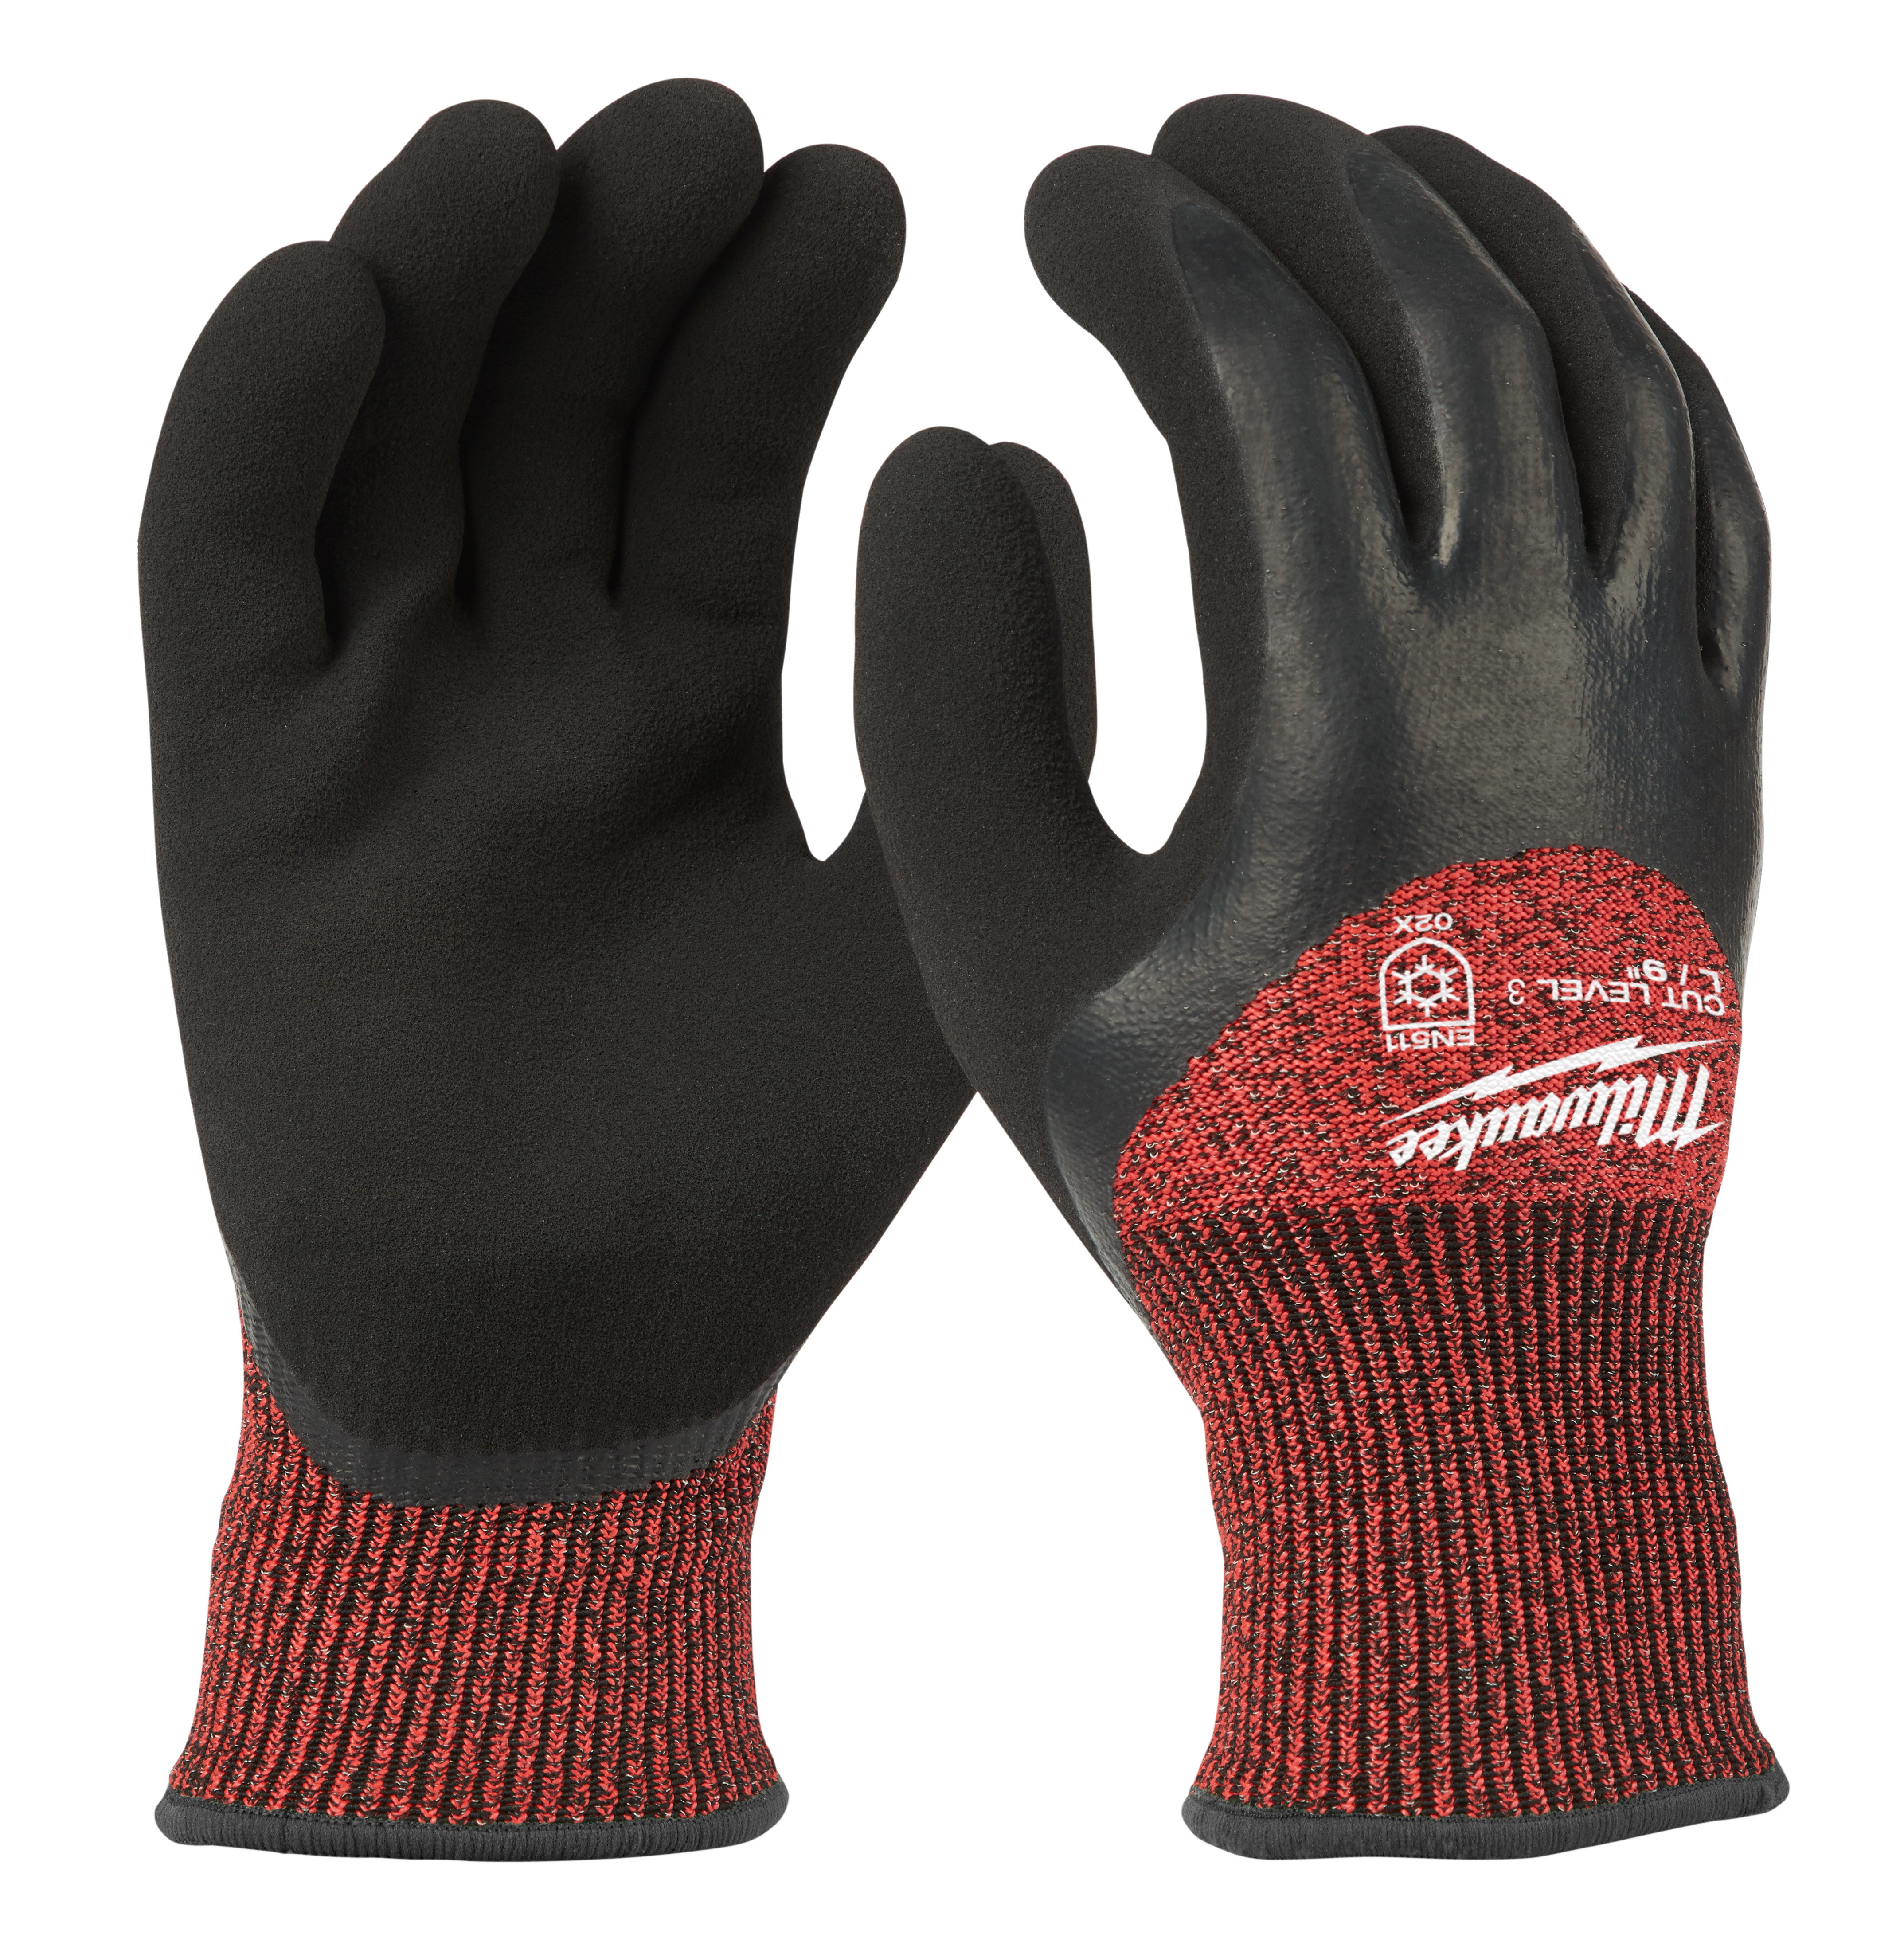 Cut Level 3 Insulated Gloves -XXL